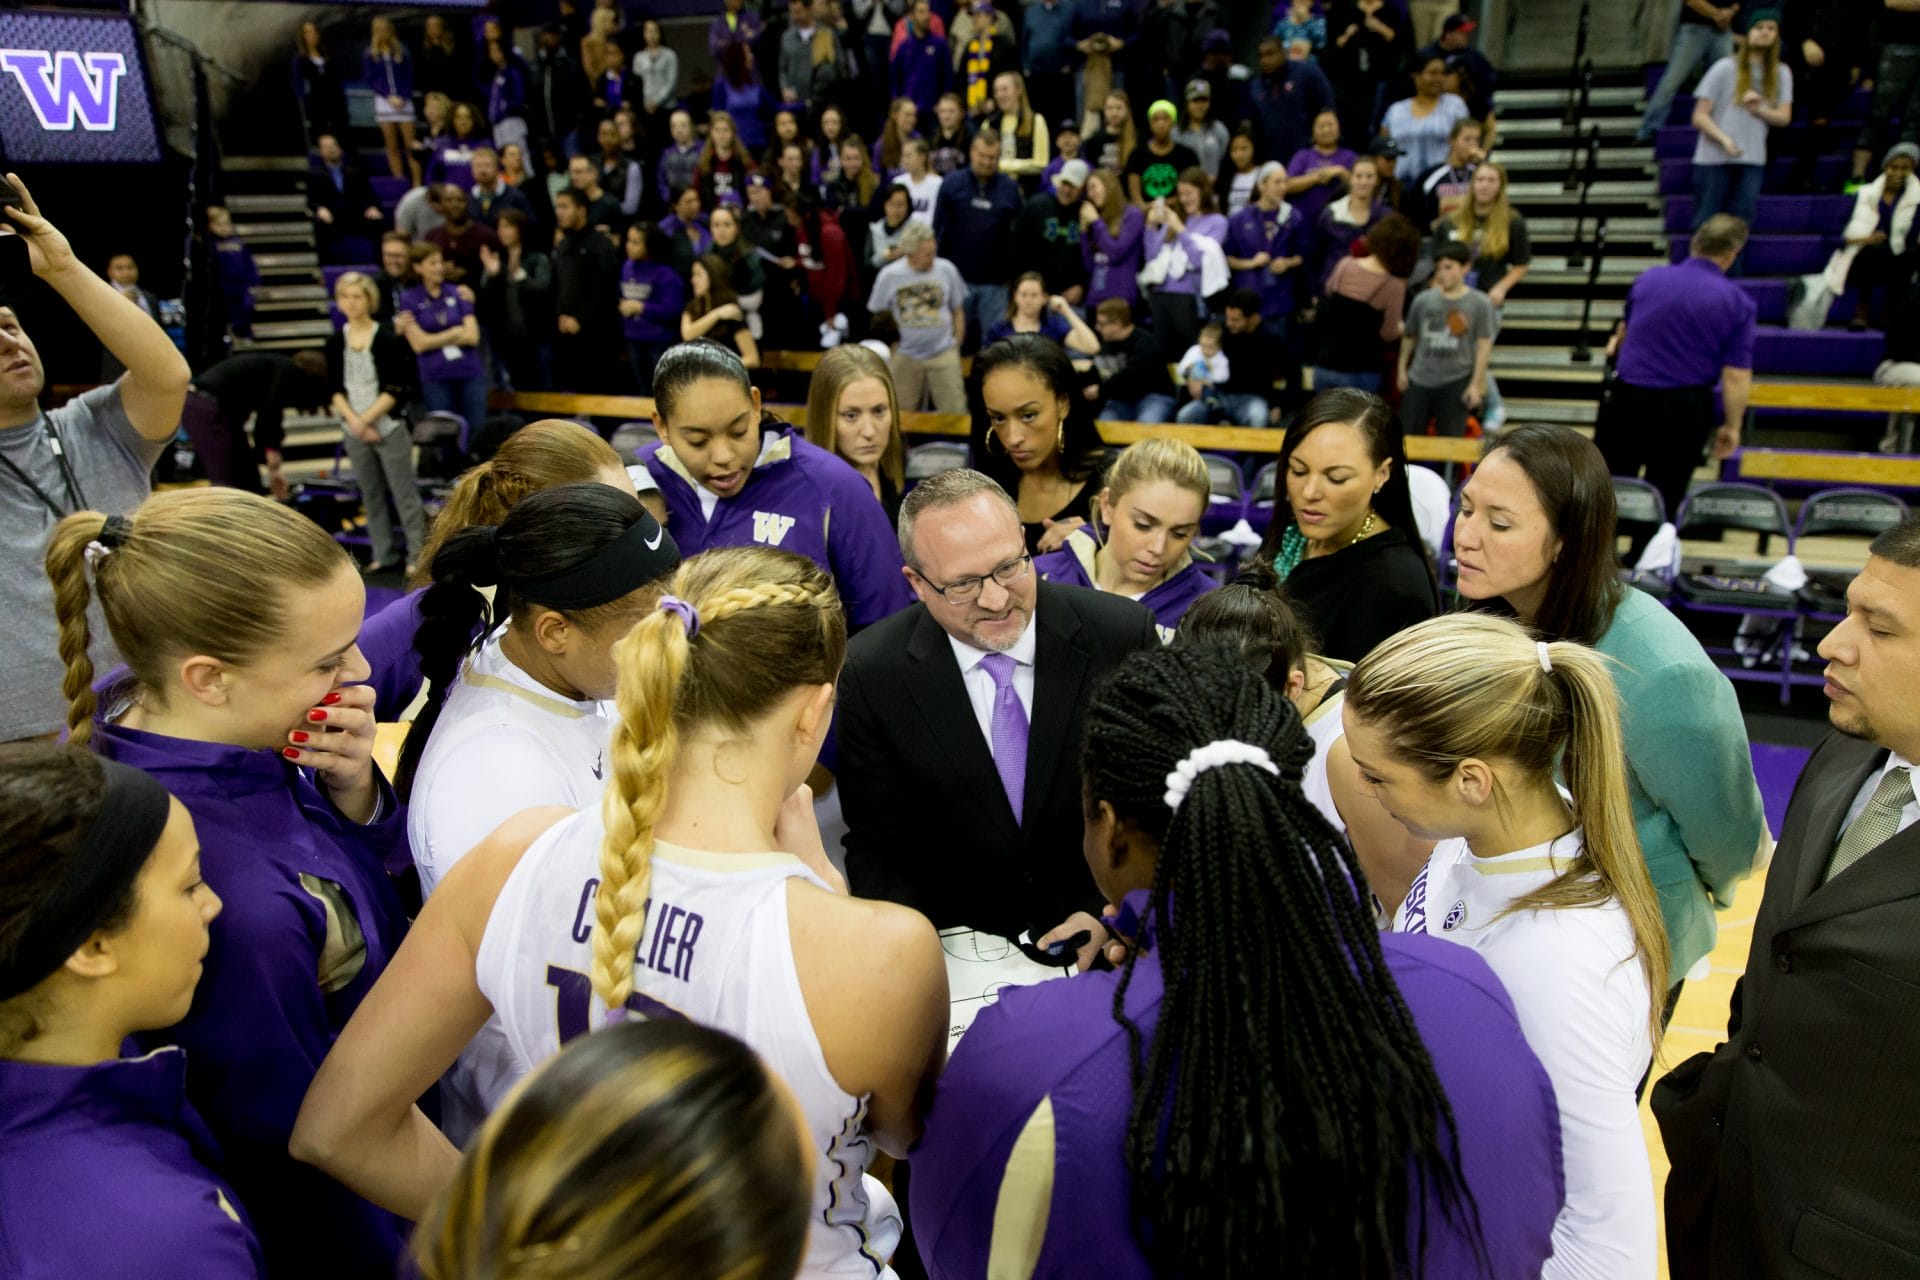 University of Washington women's basketball team plays Washington State University